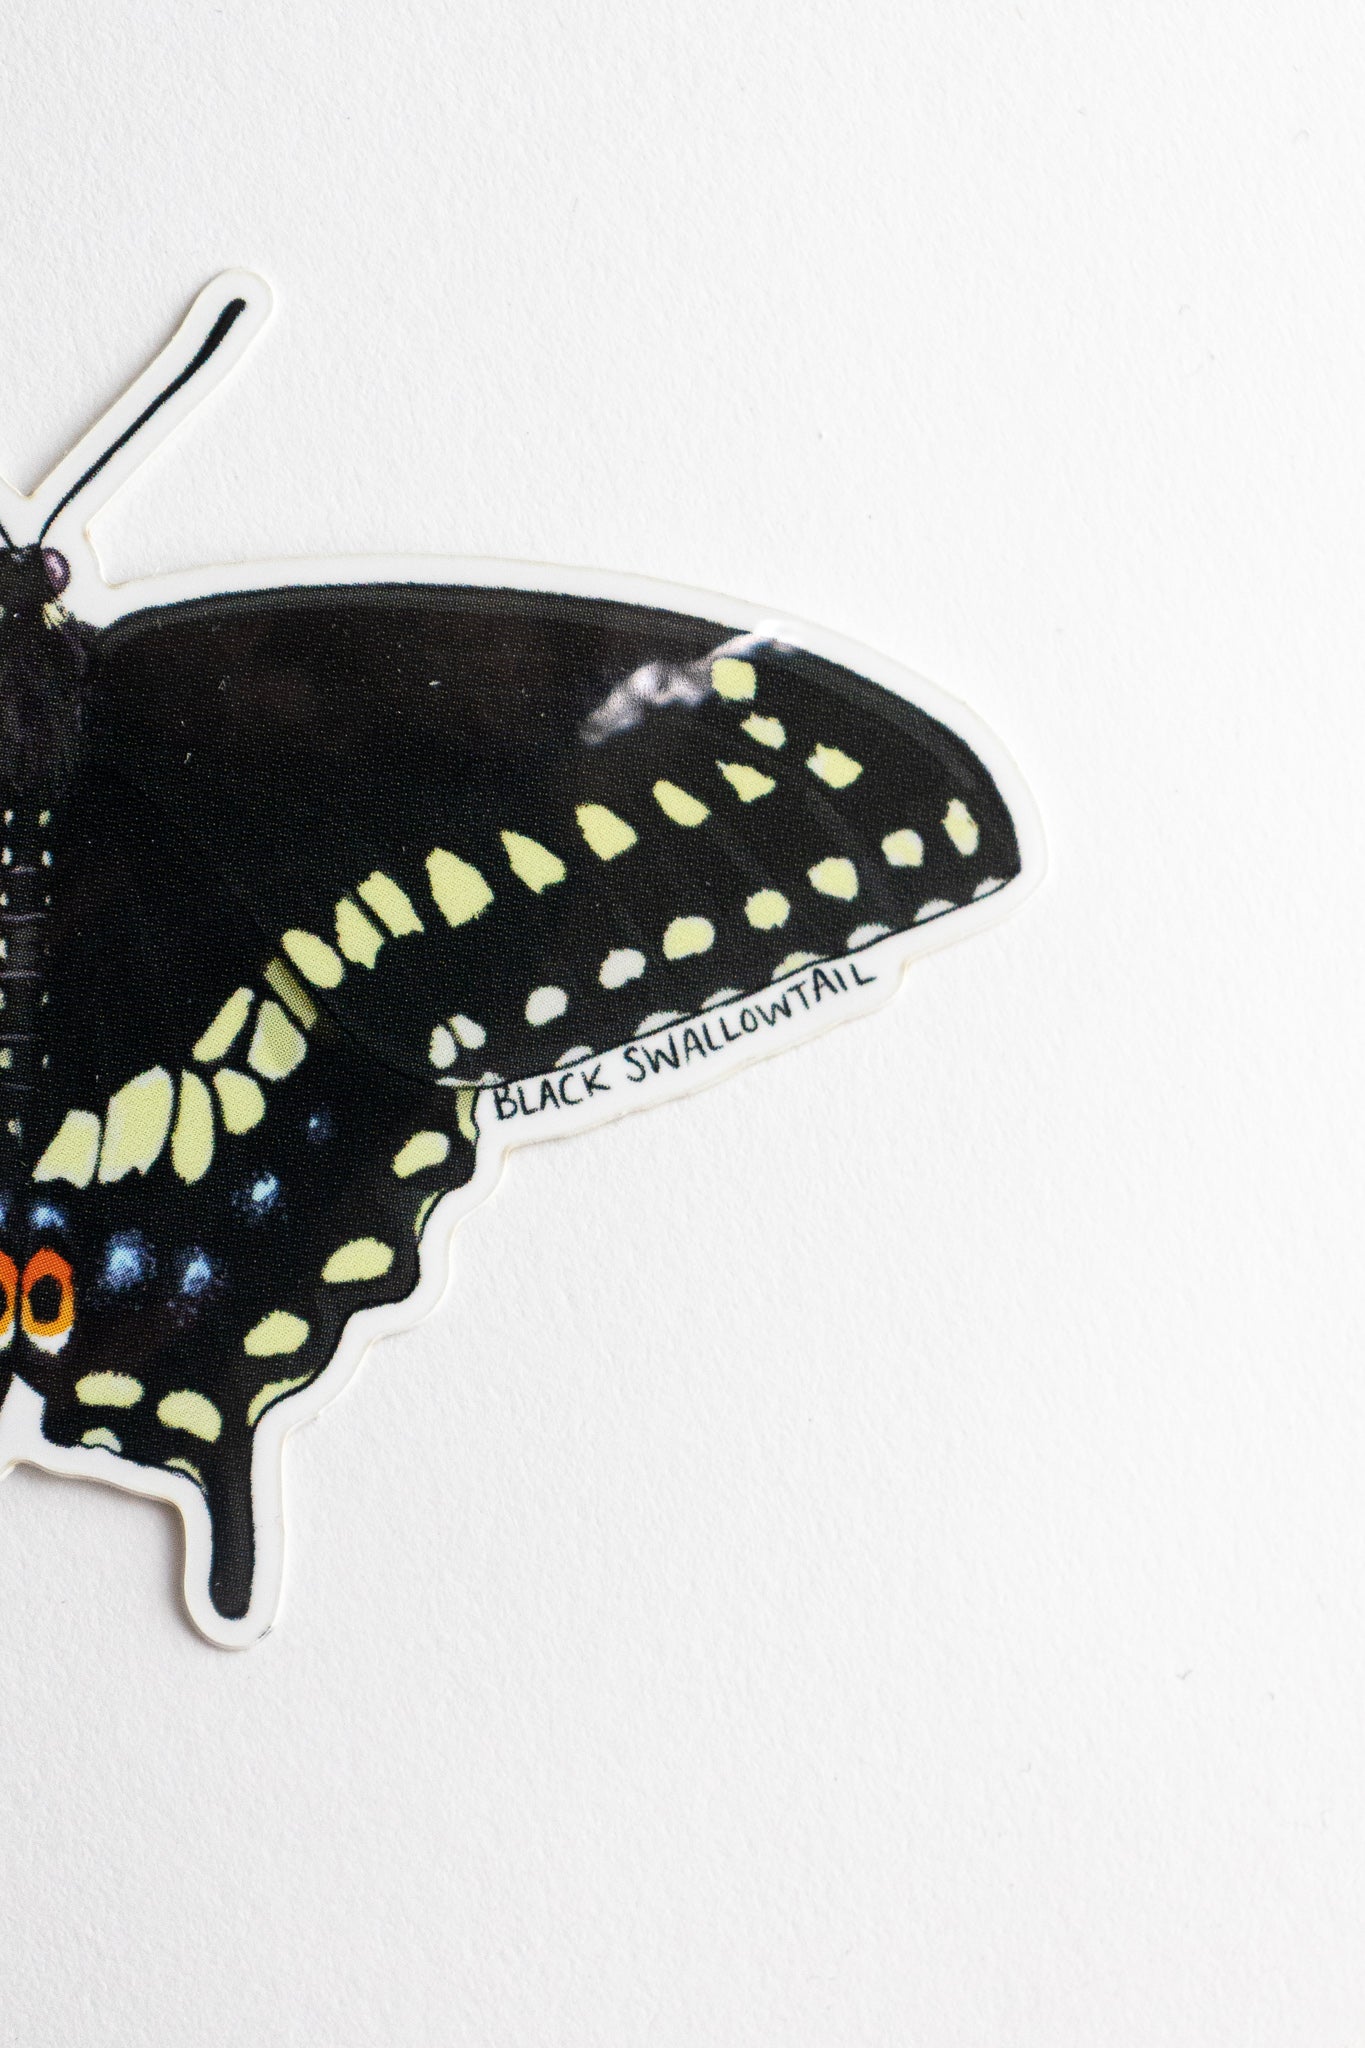 Black Swallowtail Sticker